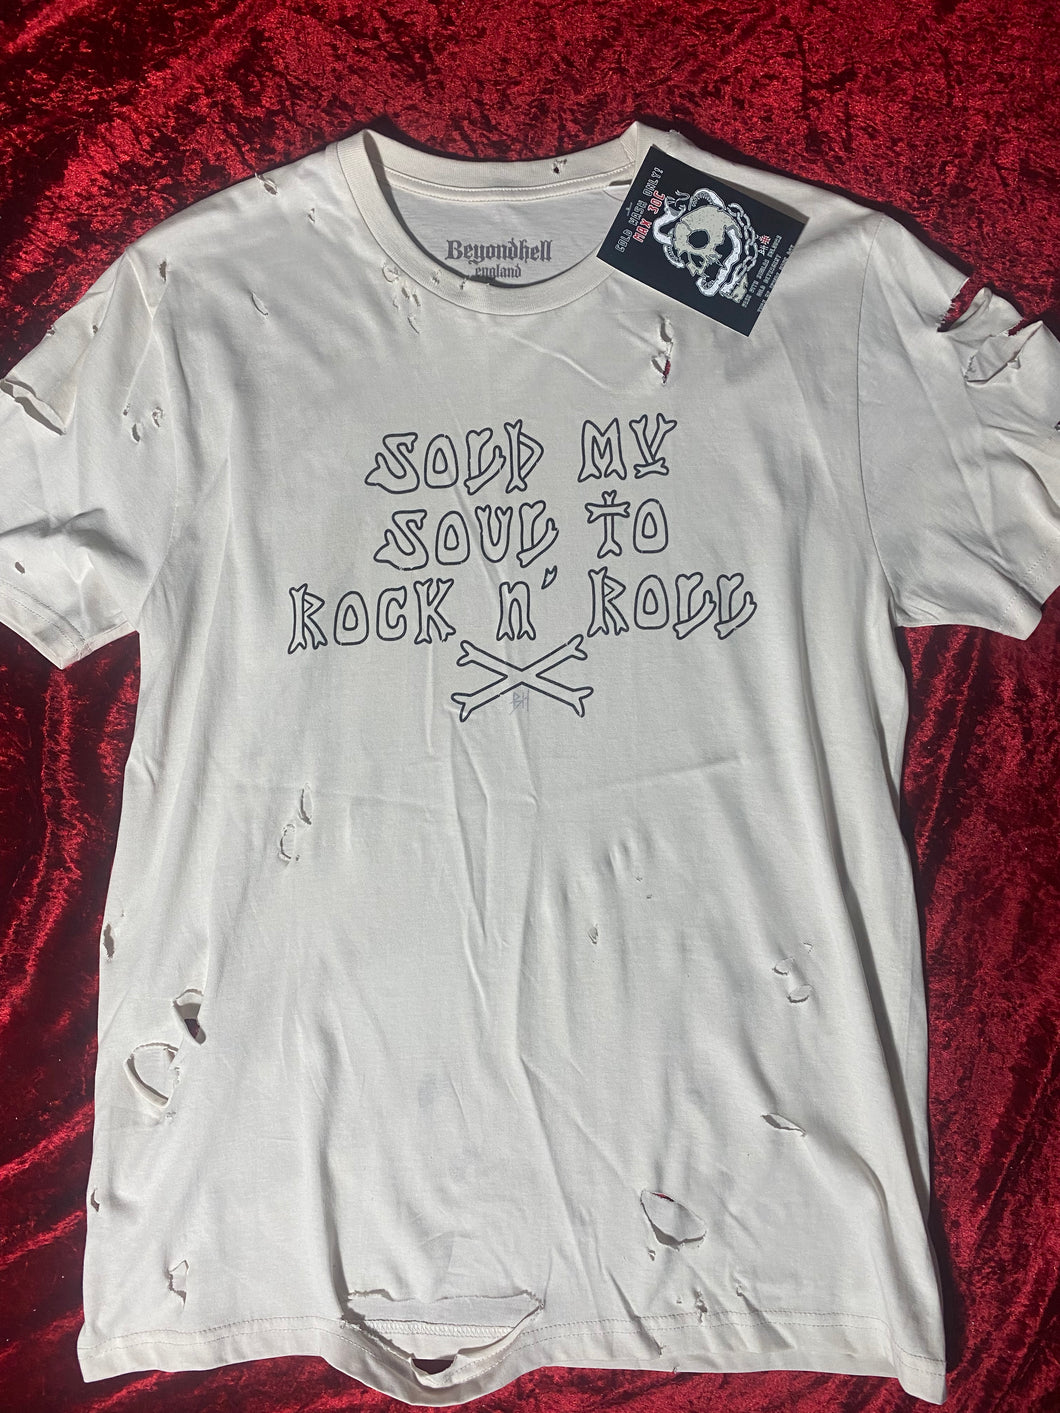 Medium - Sold my soul Tshirt